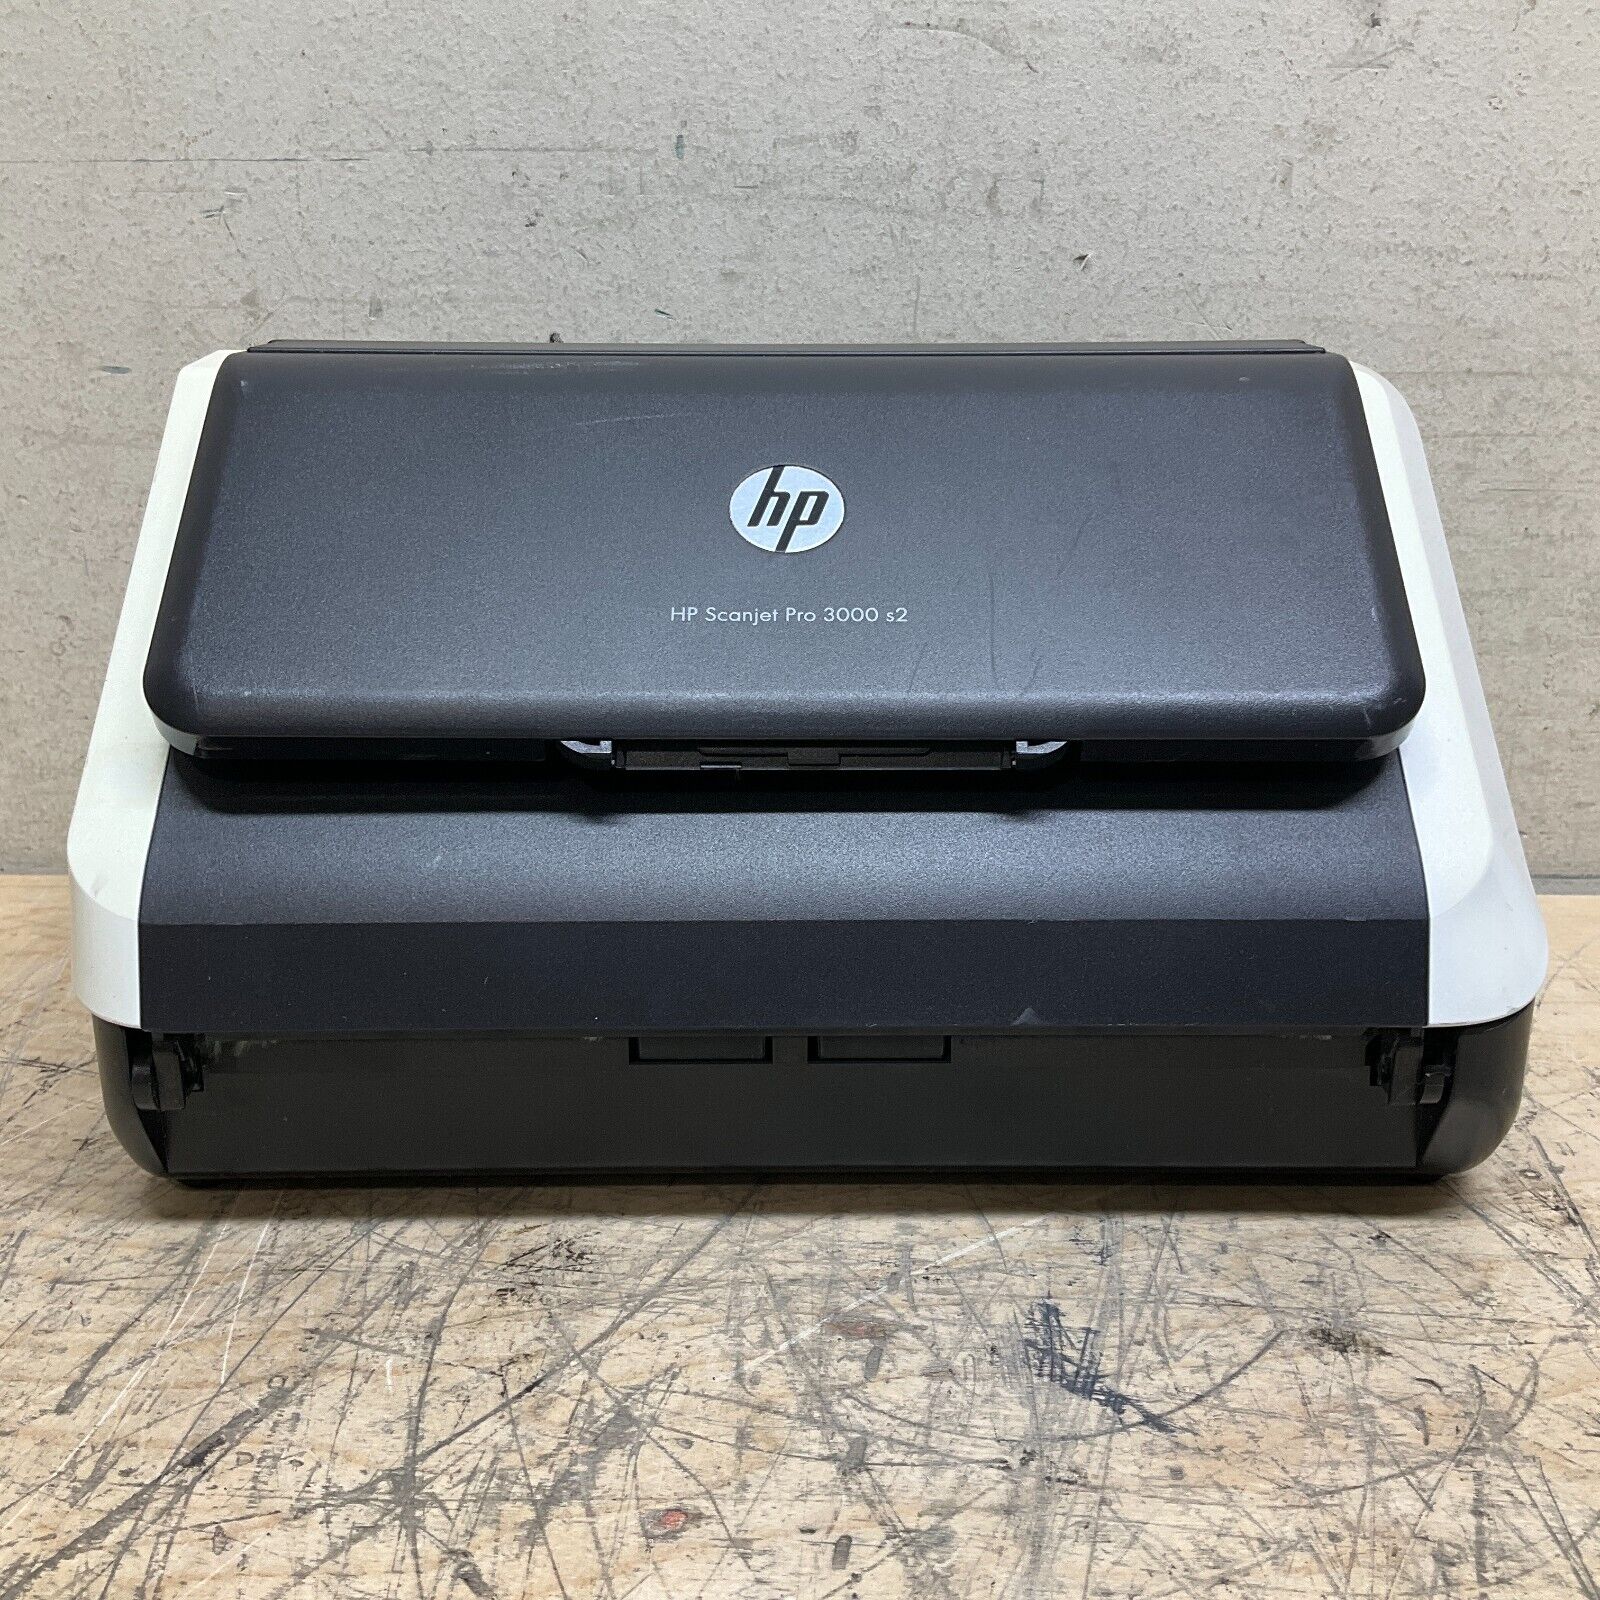 HP Scanjet Pro 3000 s2 Color Document Scanner, 18k Scans - TESTED & WORKING